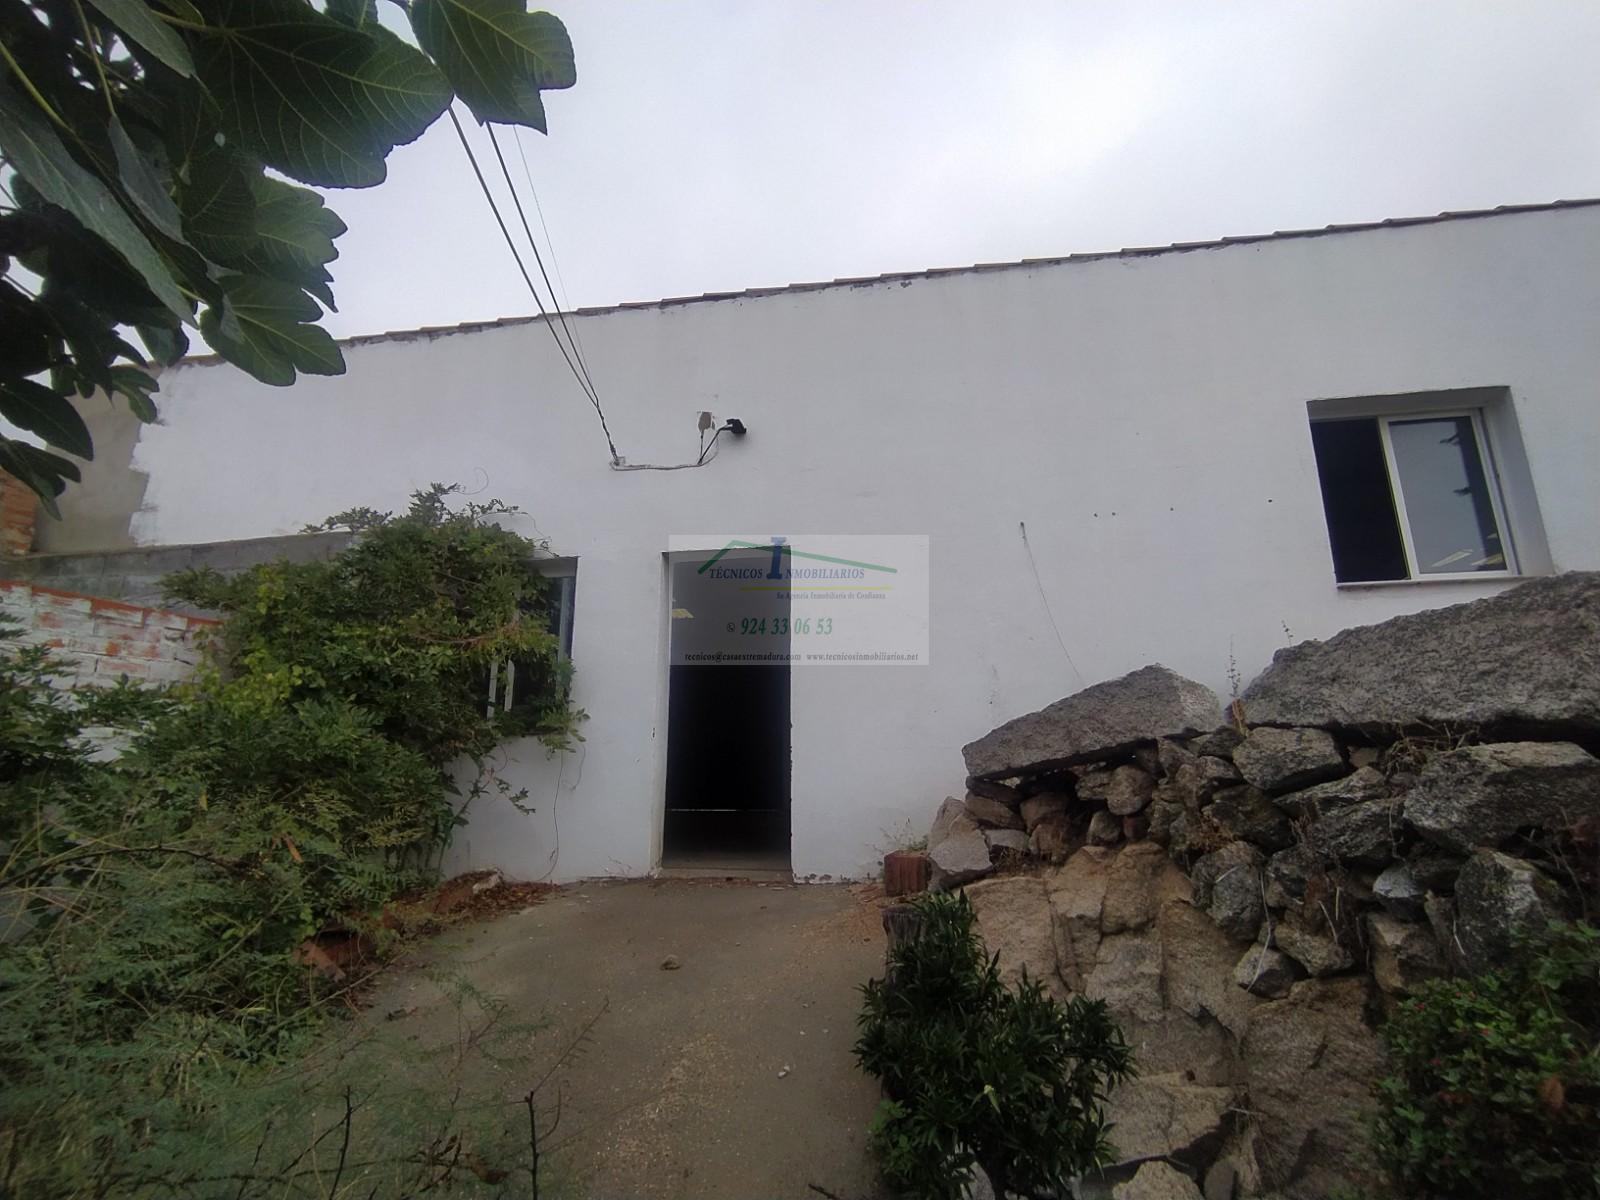 Verkoop van huis in Esparragalejo